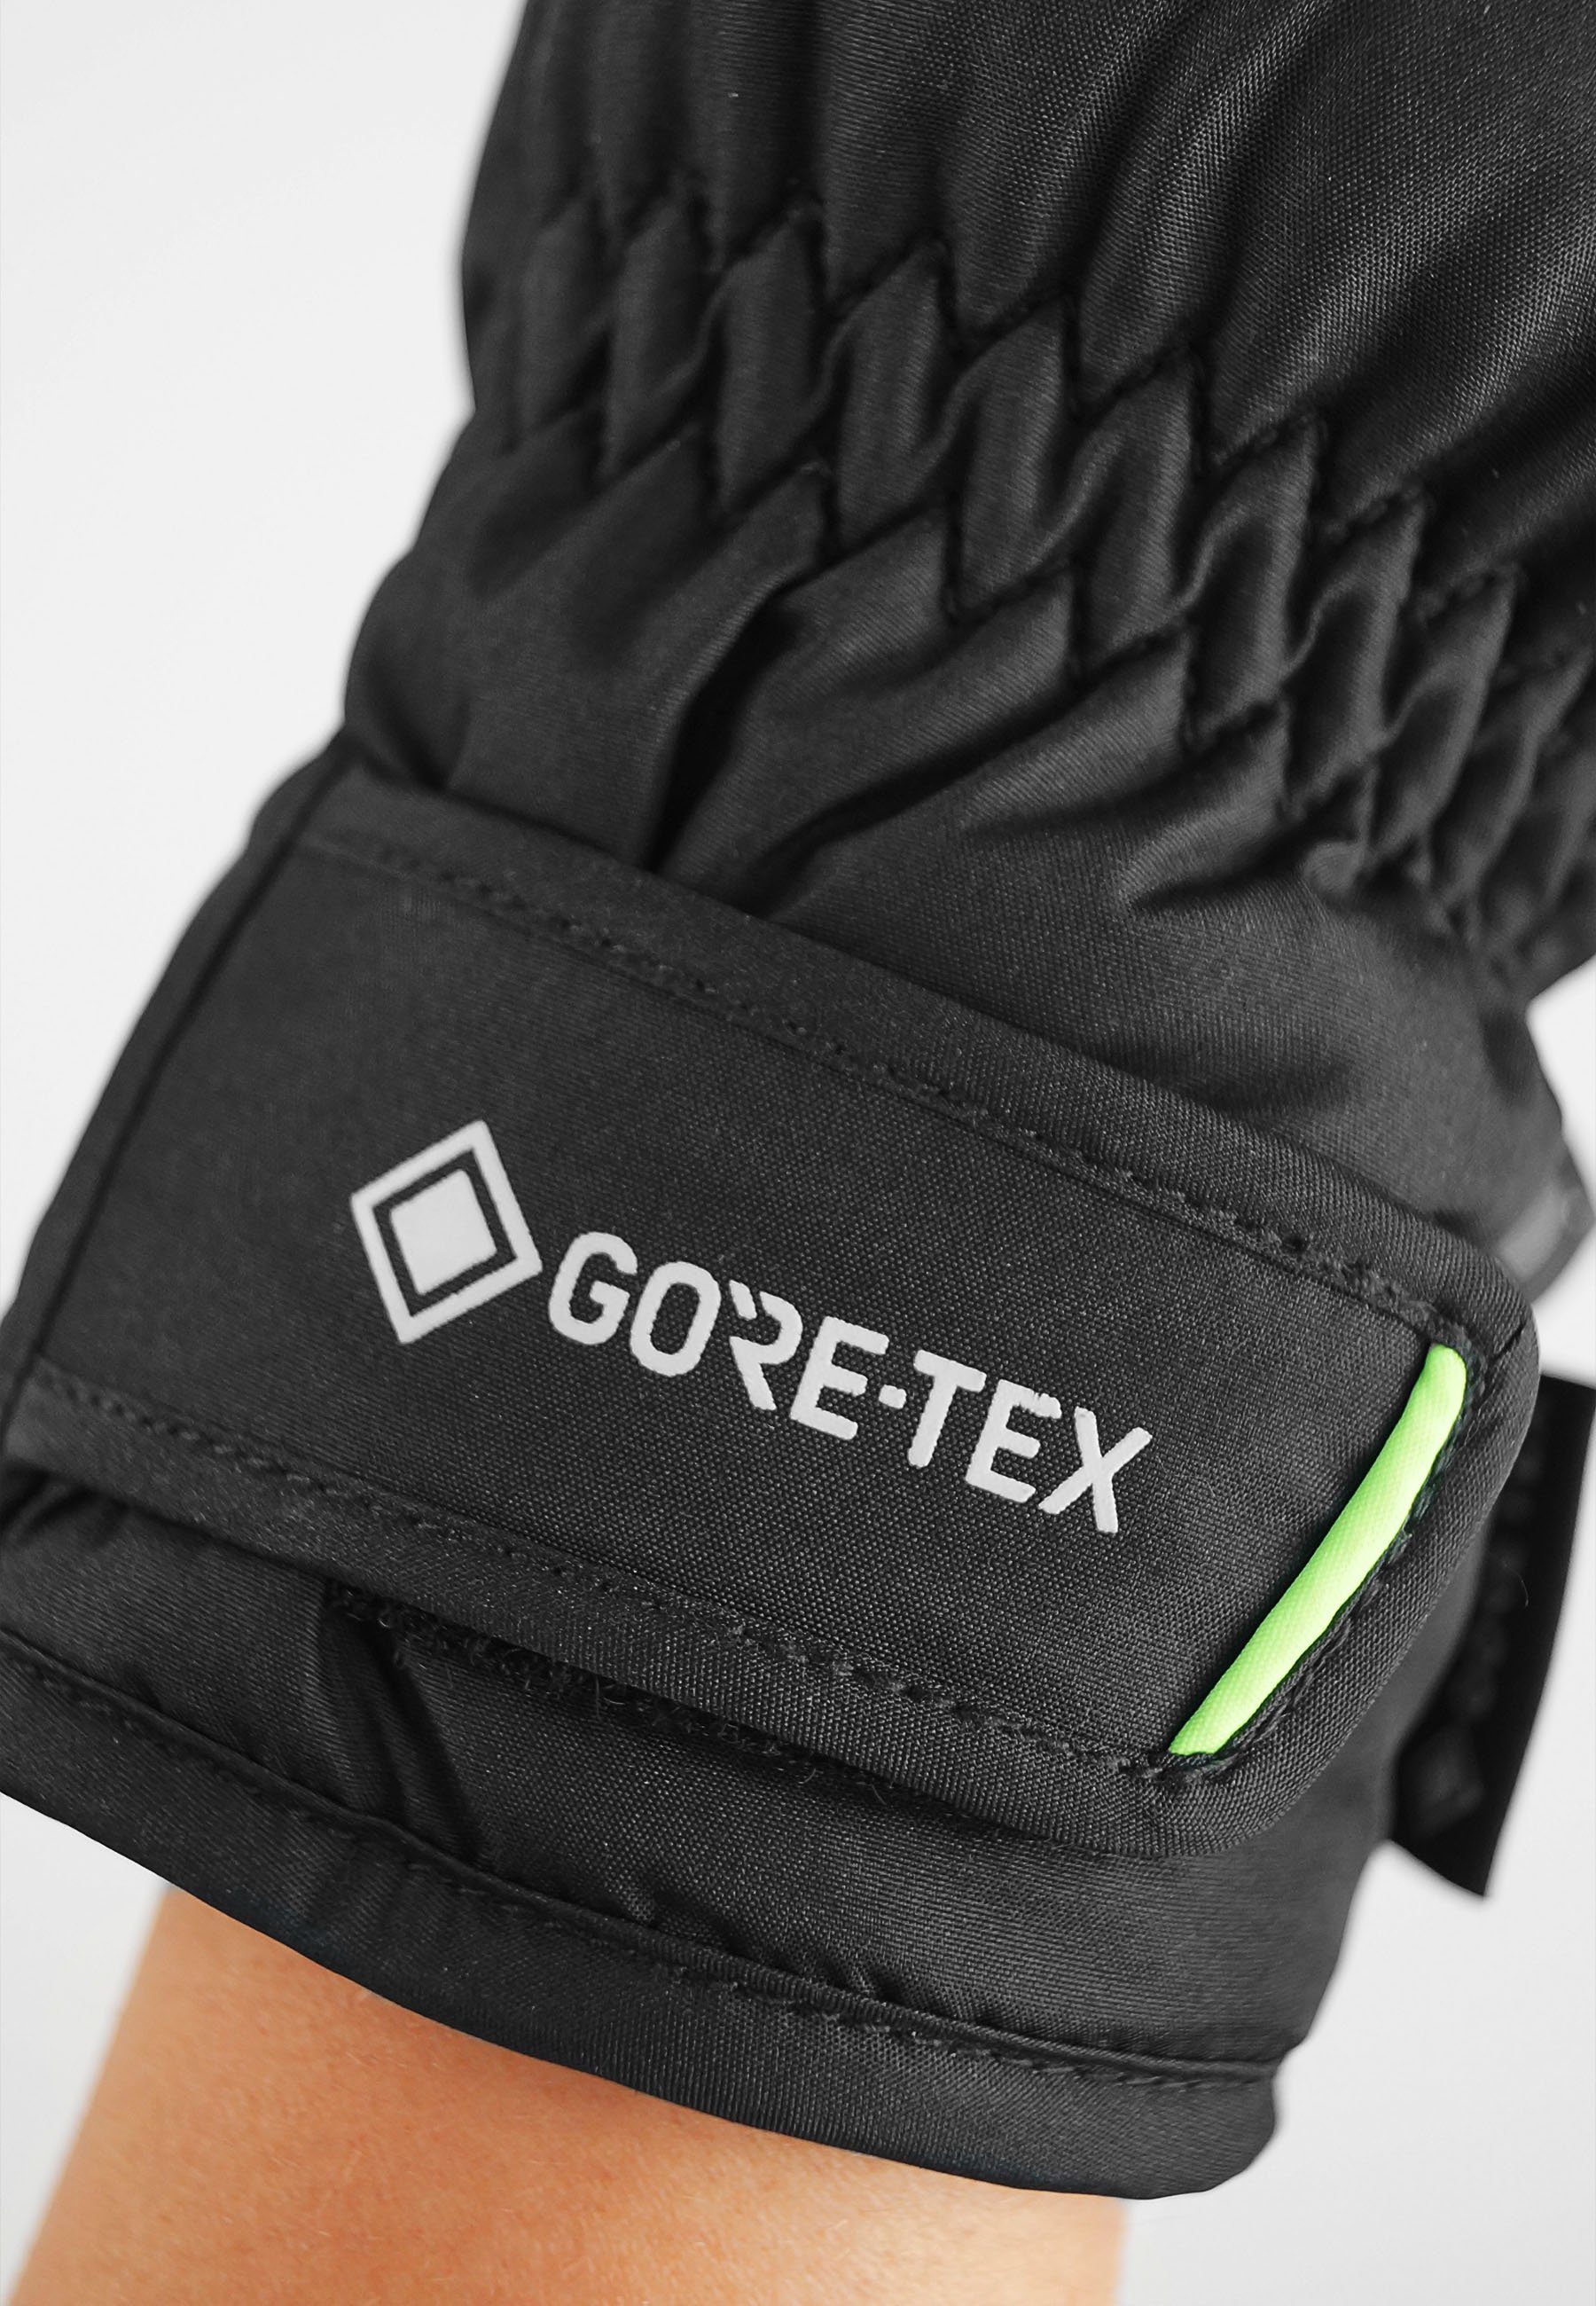 Funktionsmembran GORE-TEX wasserdichter mit Skihandschuhe Reusch Teddy grün-schwarz